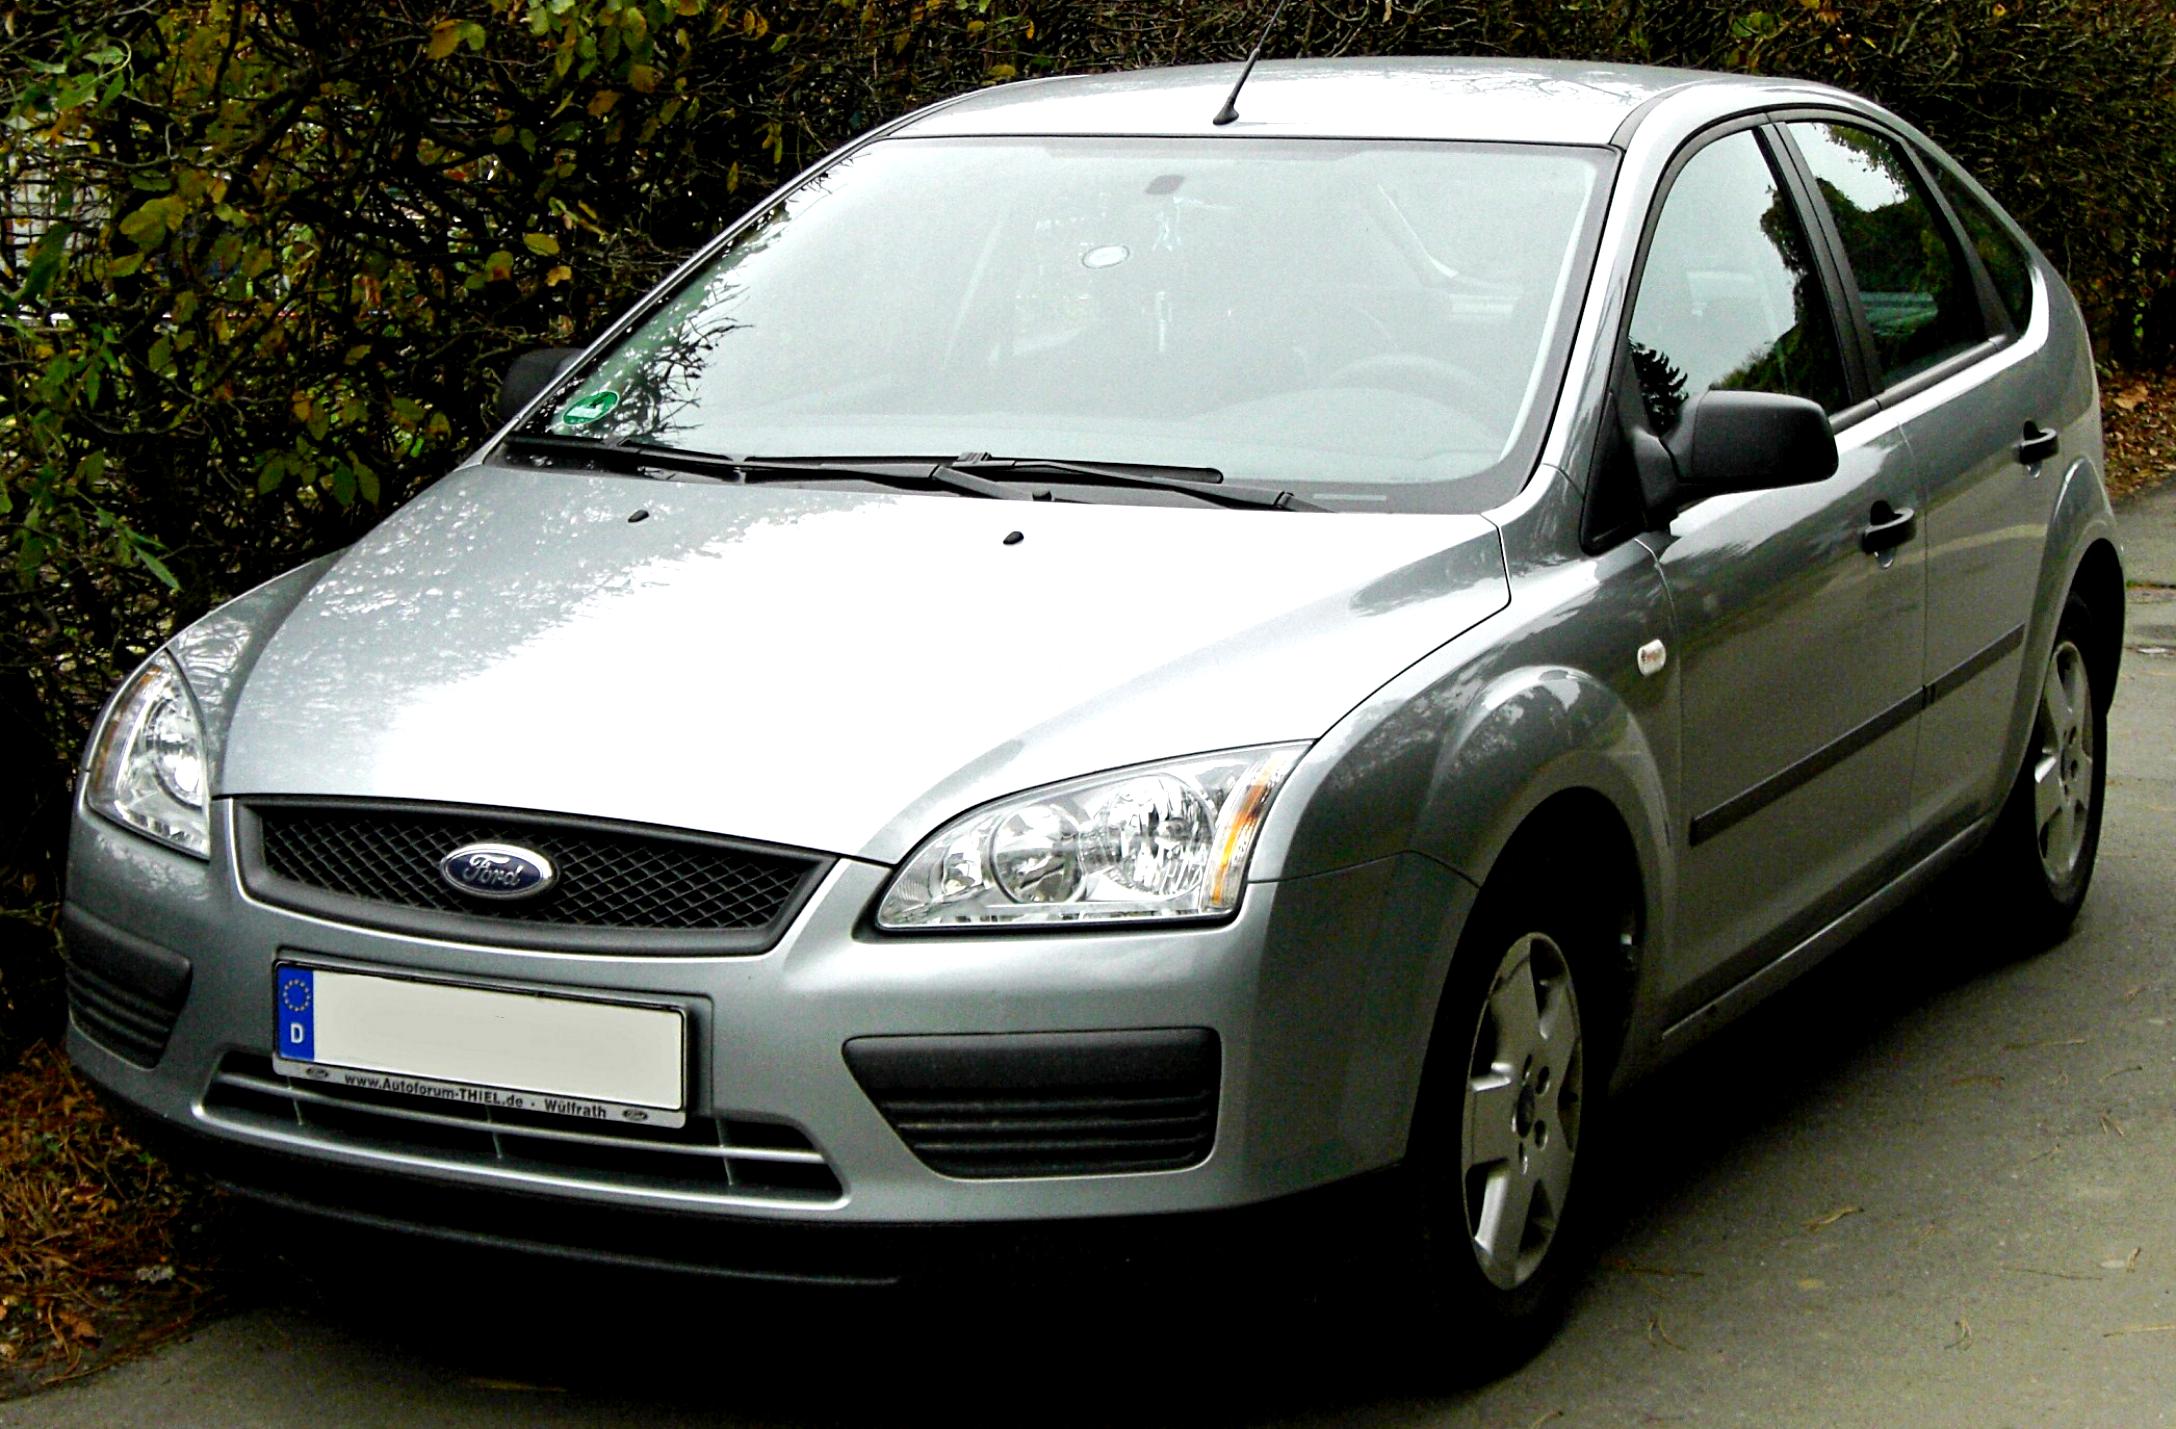 Ford Focus Wagon 2001 #58